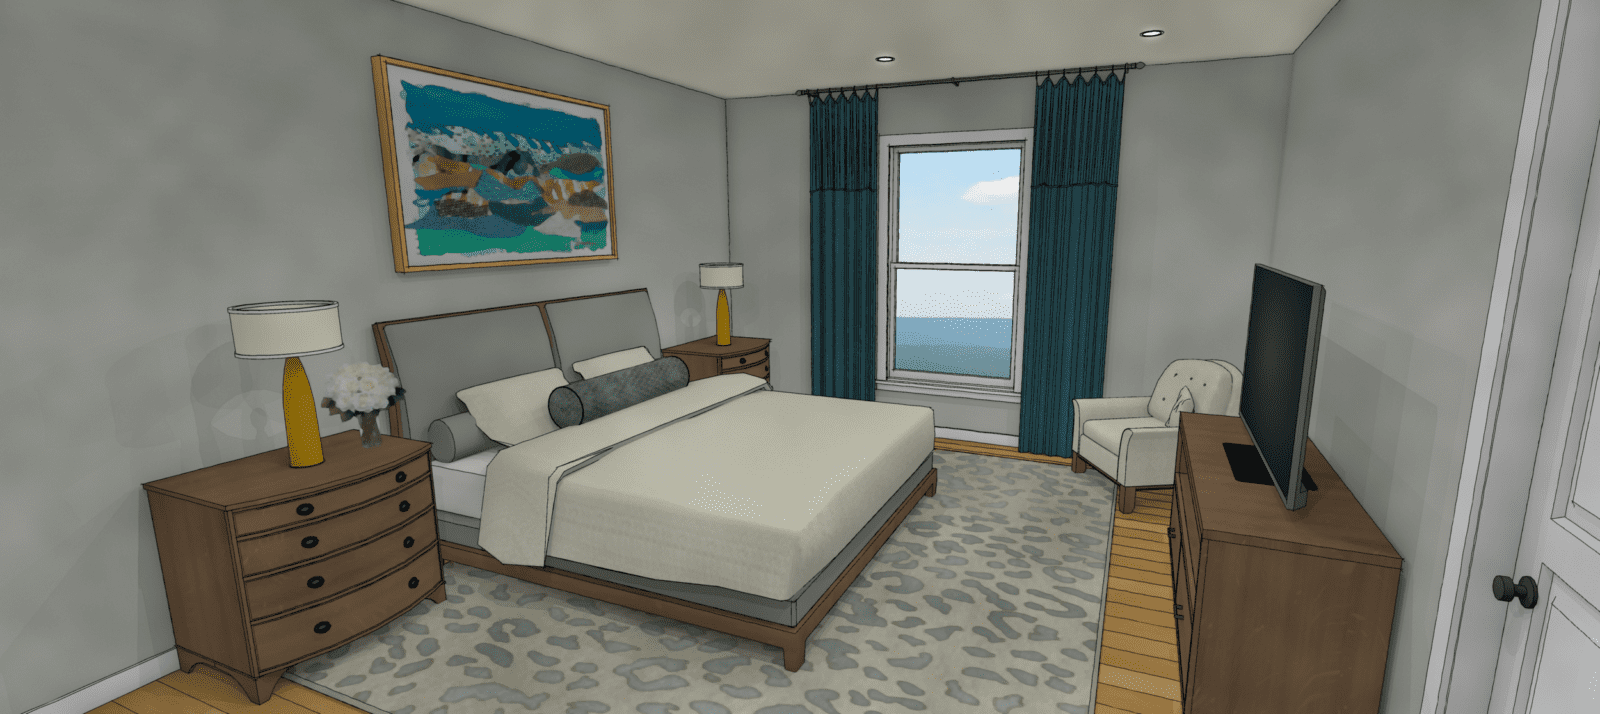 virtual bedroom furniture arrangement